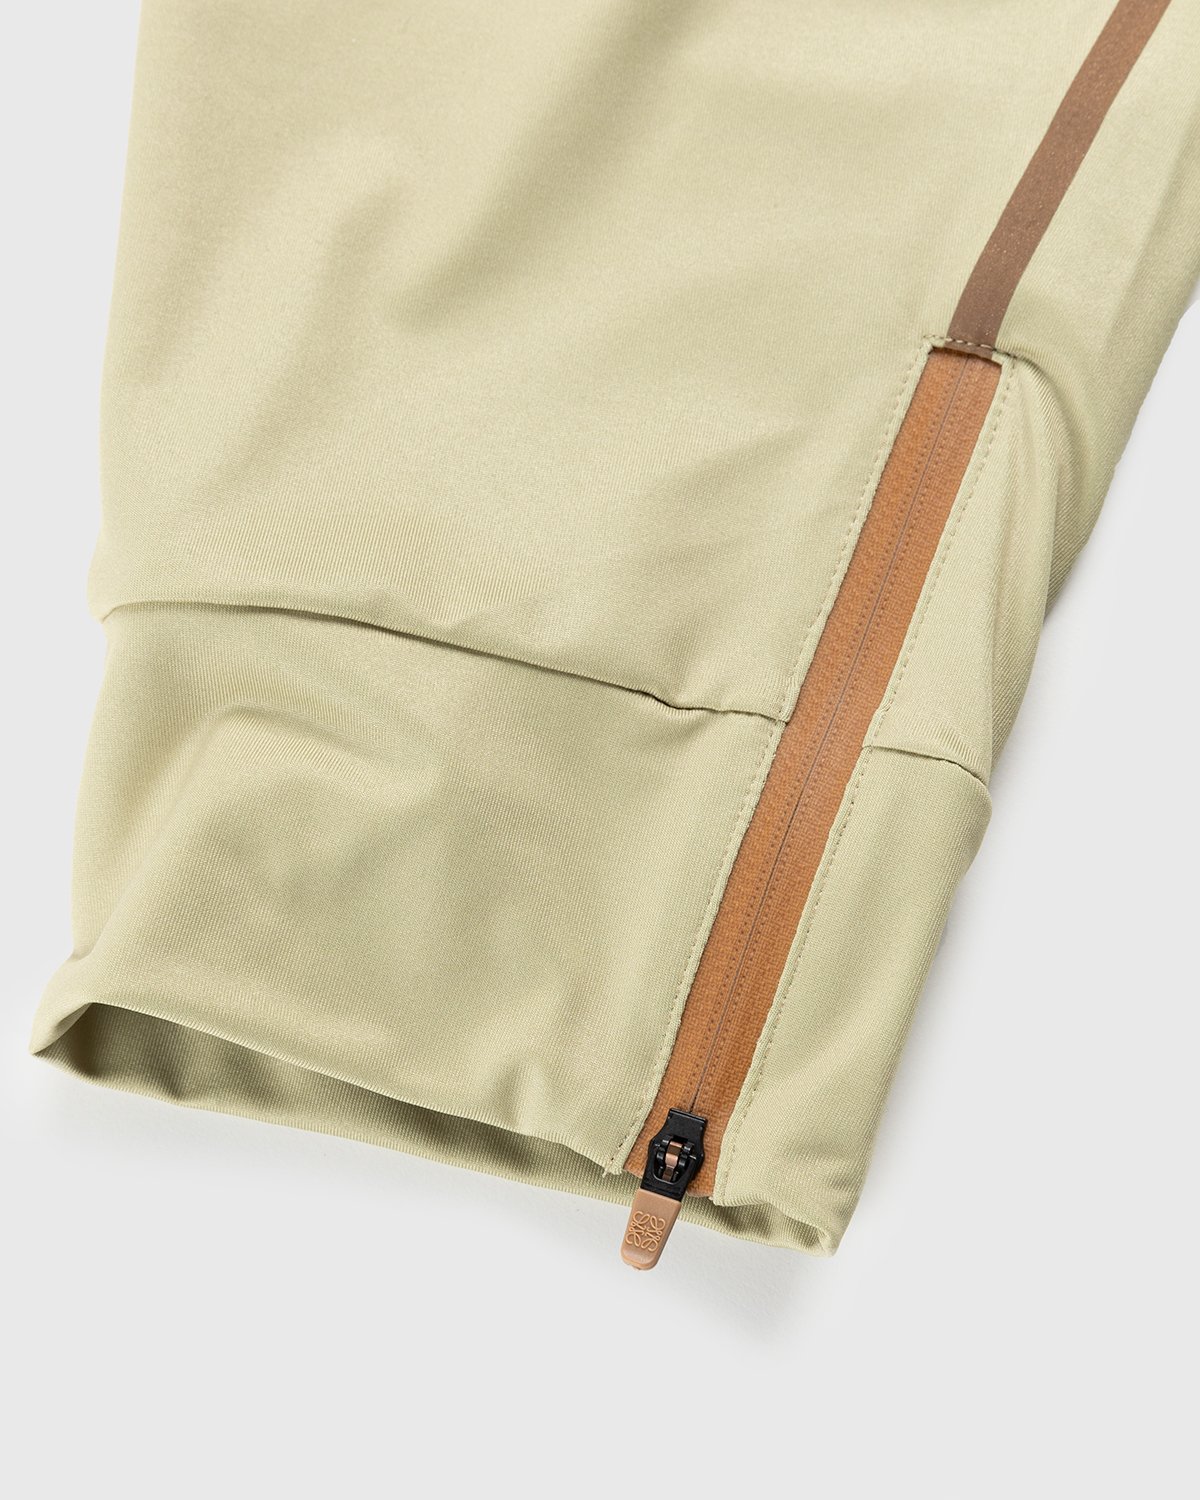 Loewe x On - Men's Technical Running Pants Gradient Khaki - Clothing - Green - Image 6